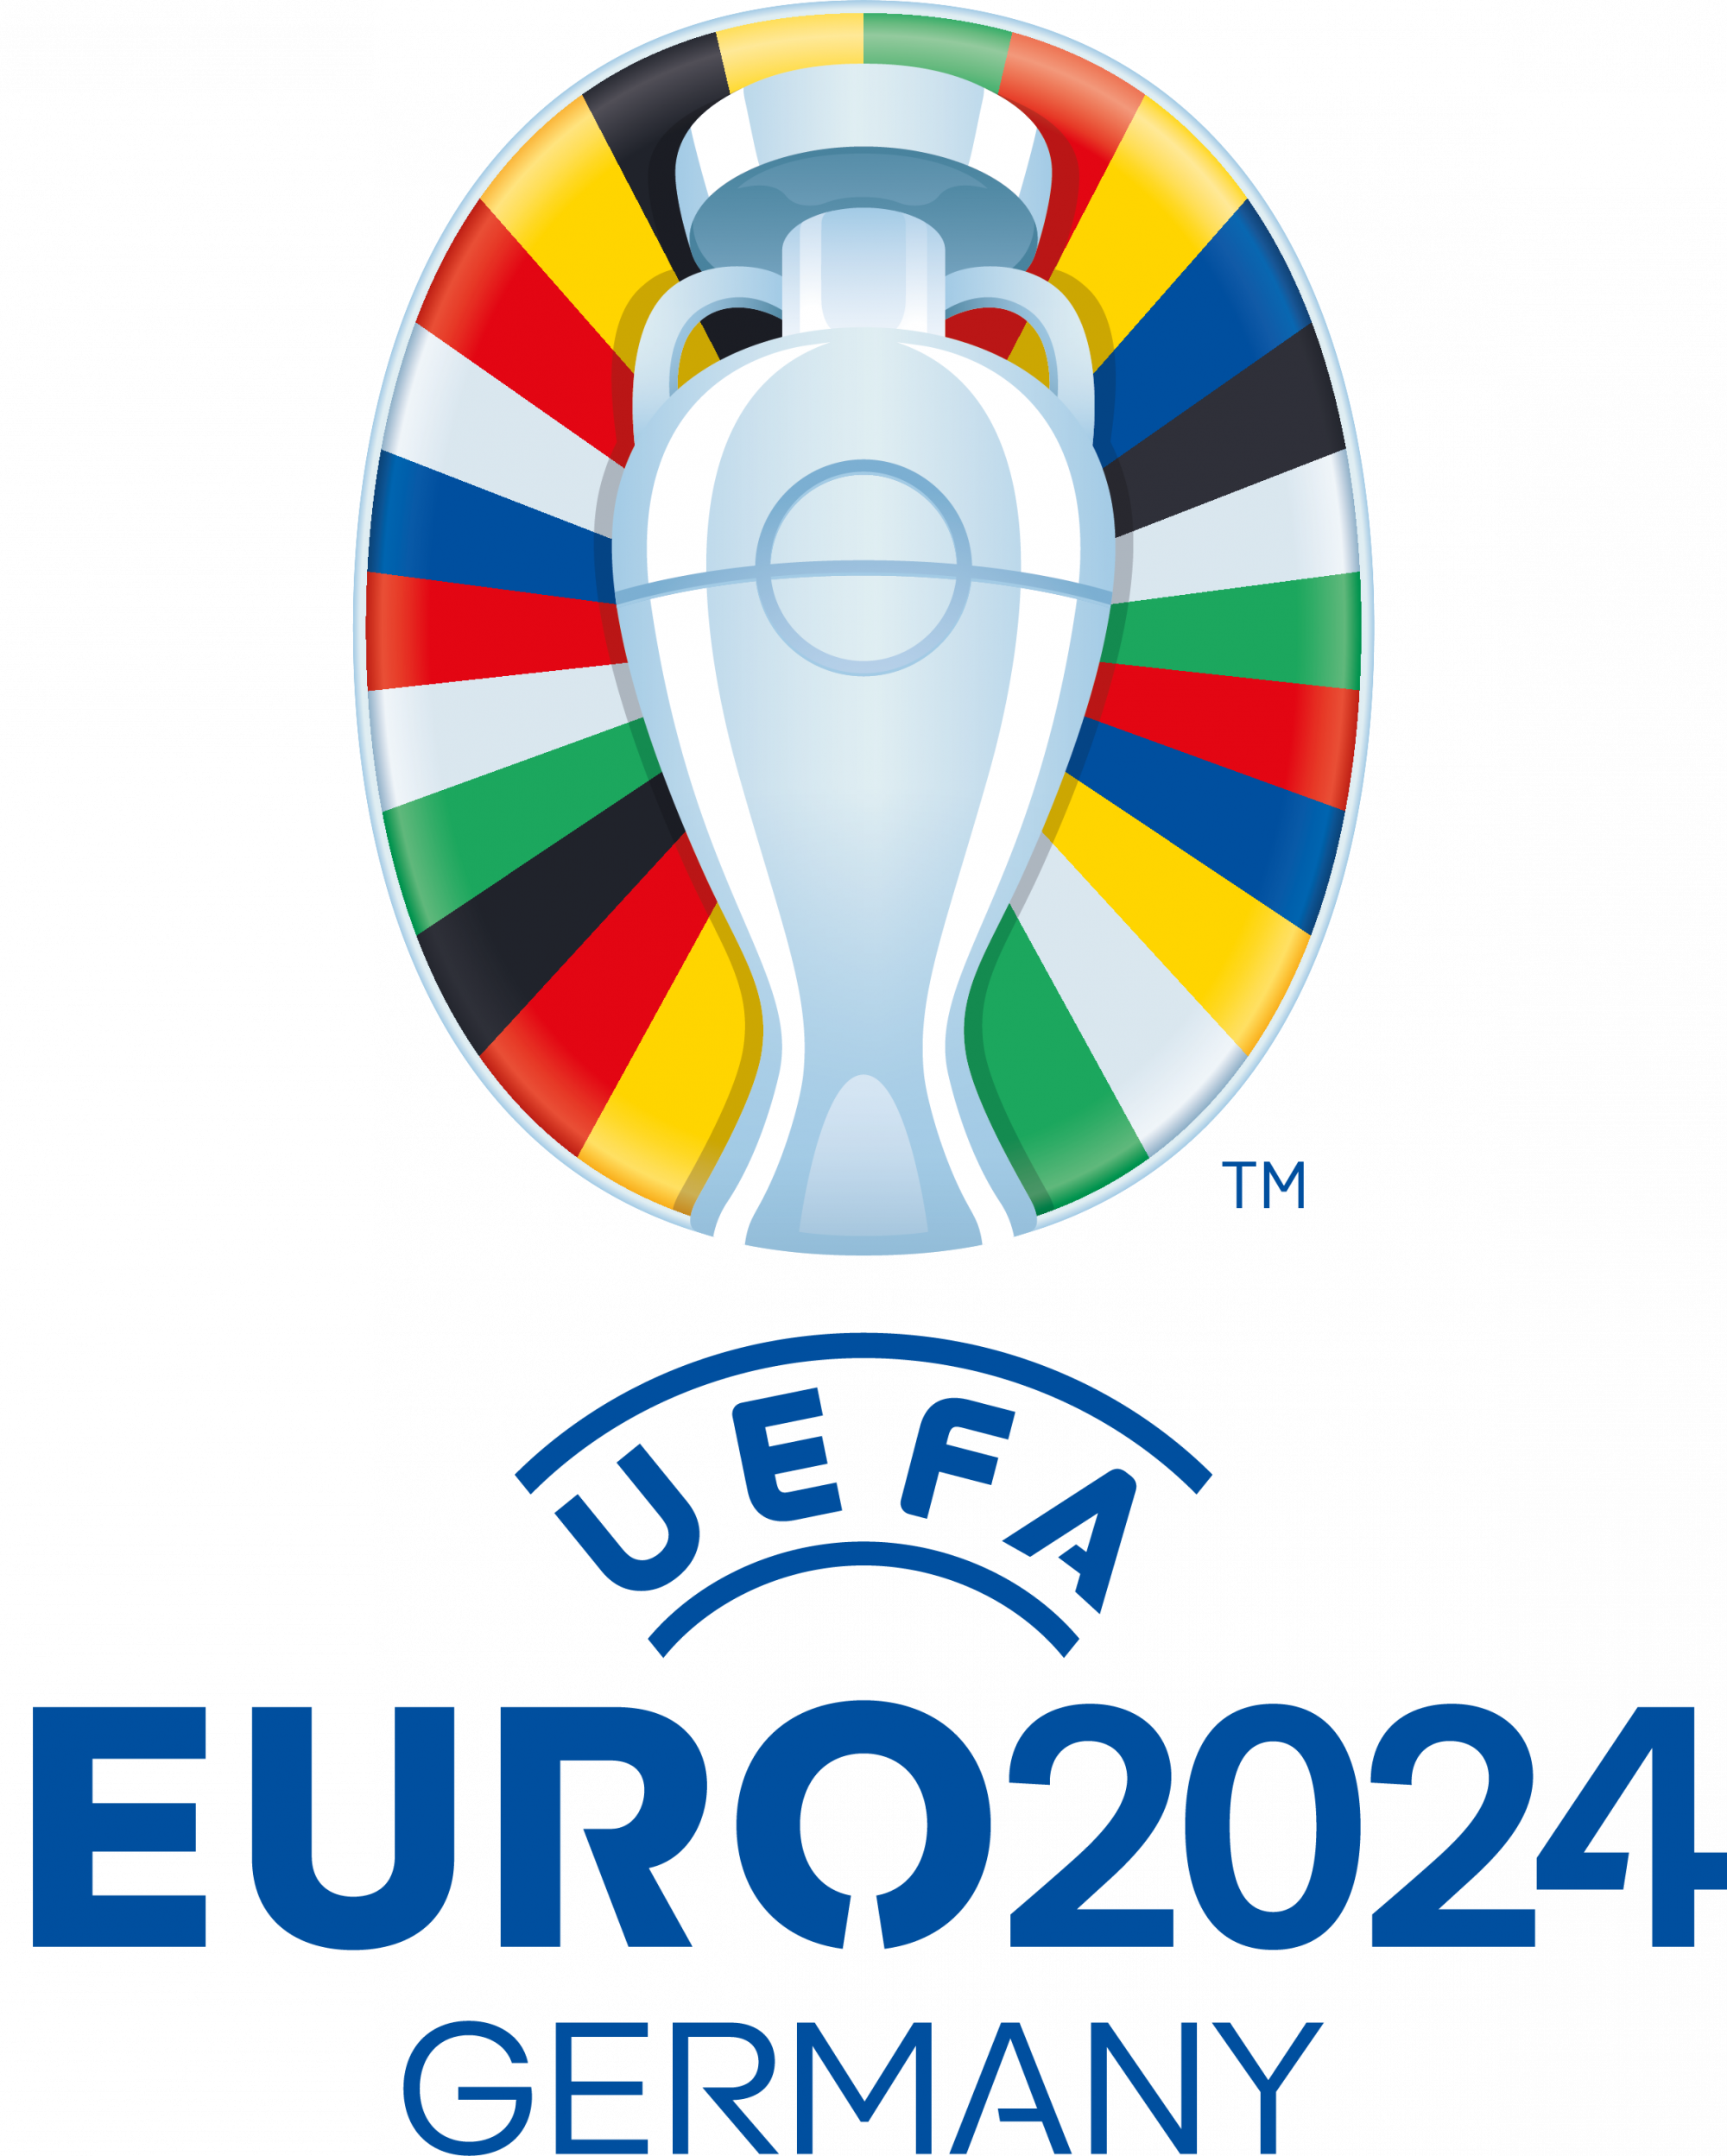 یورو 2024